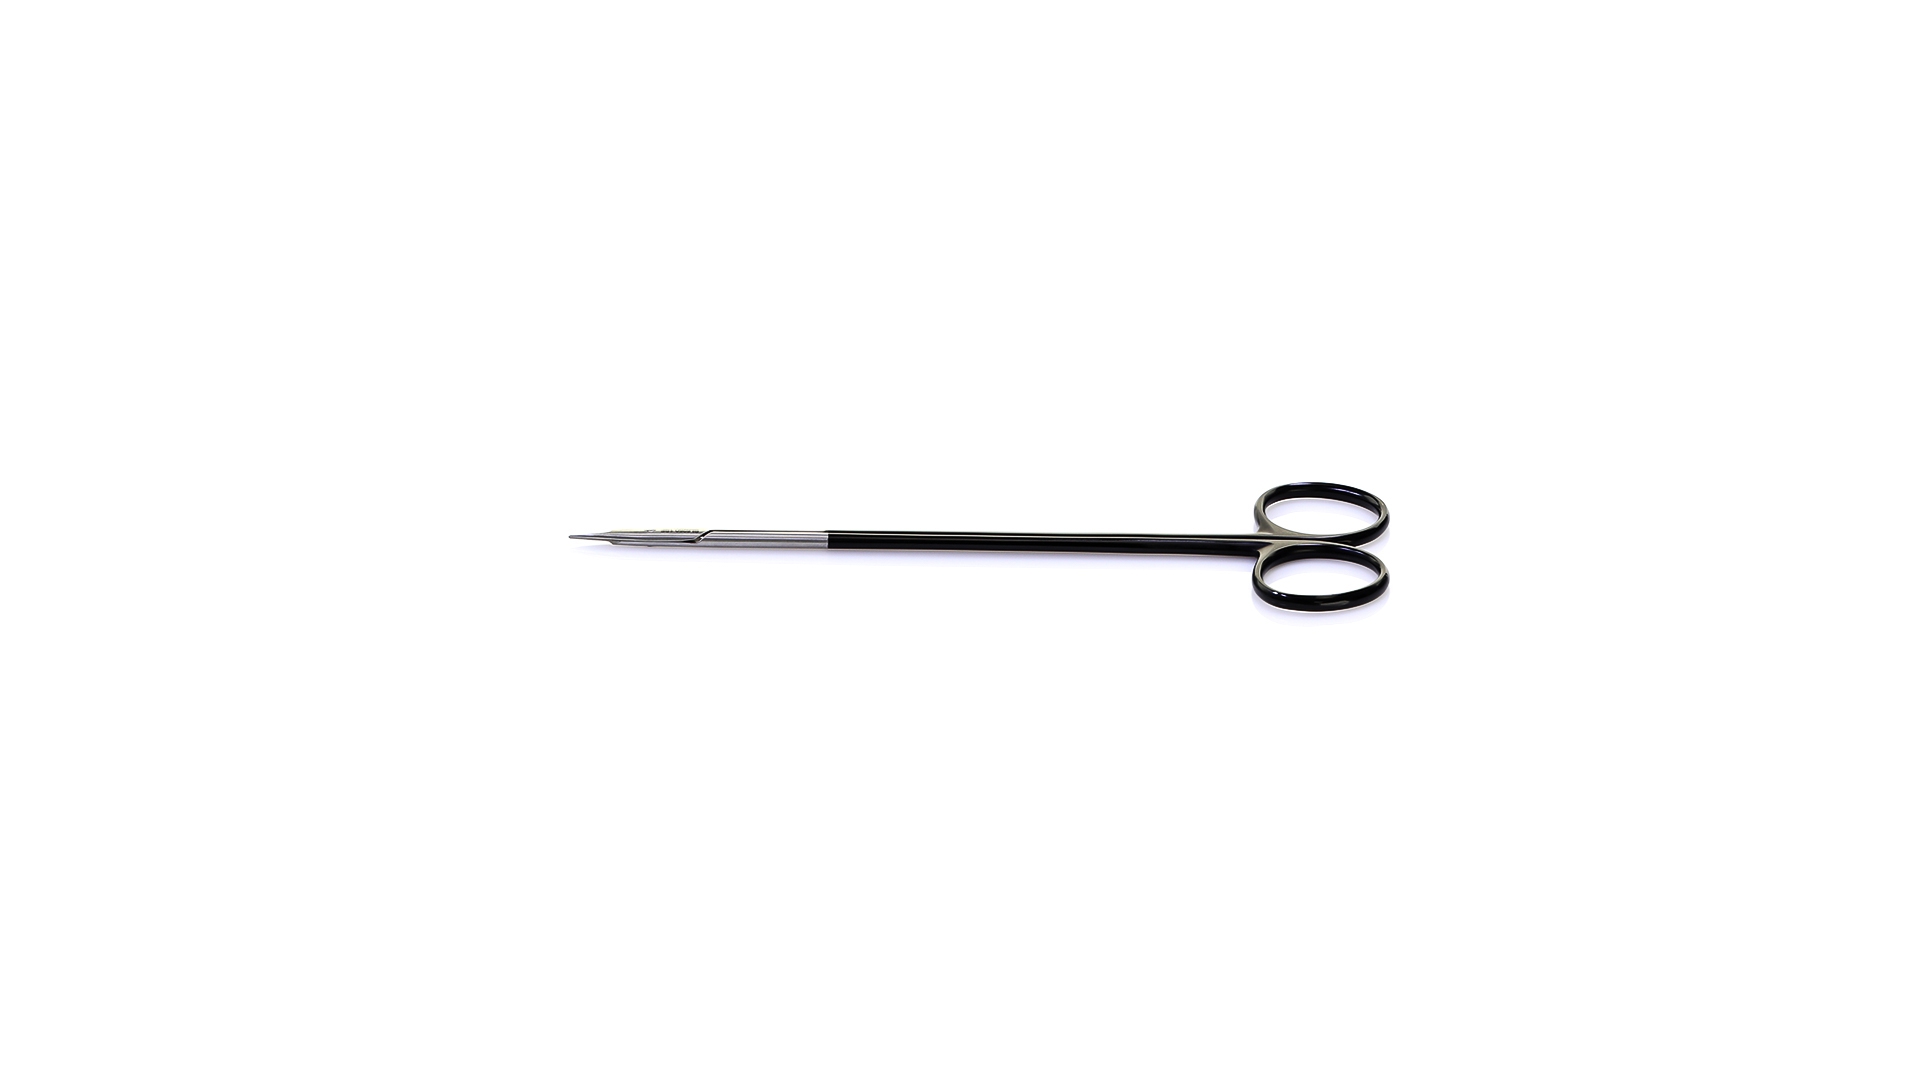 Diethrich-Potts Scissors - 0° Straight Short Fine Razor edge Blades